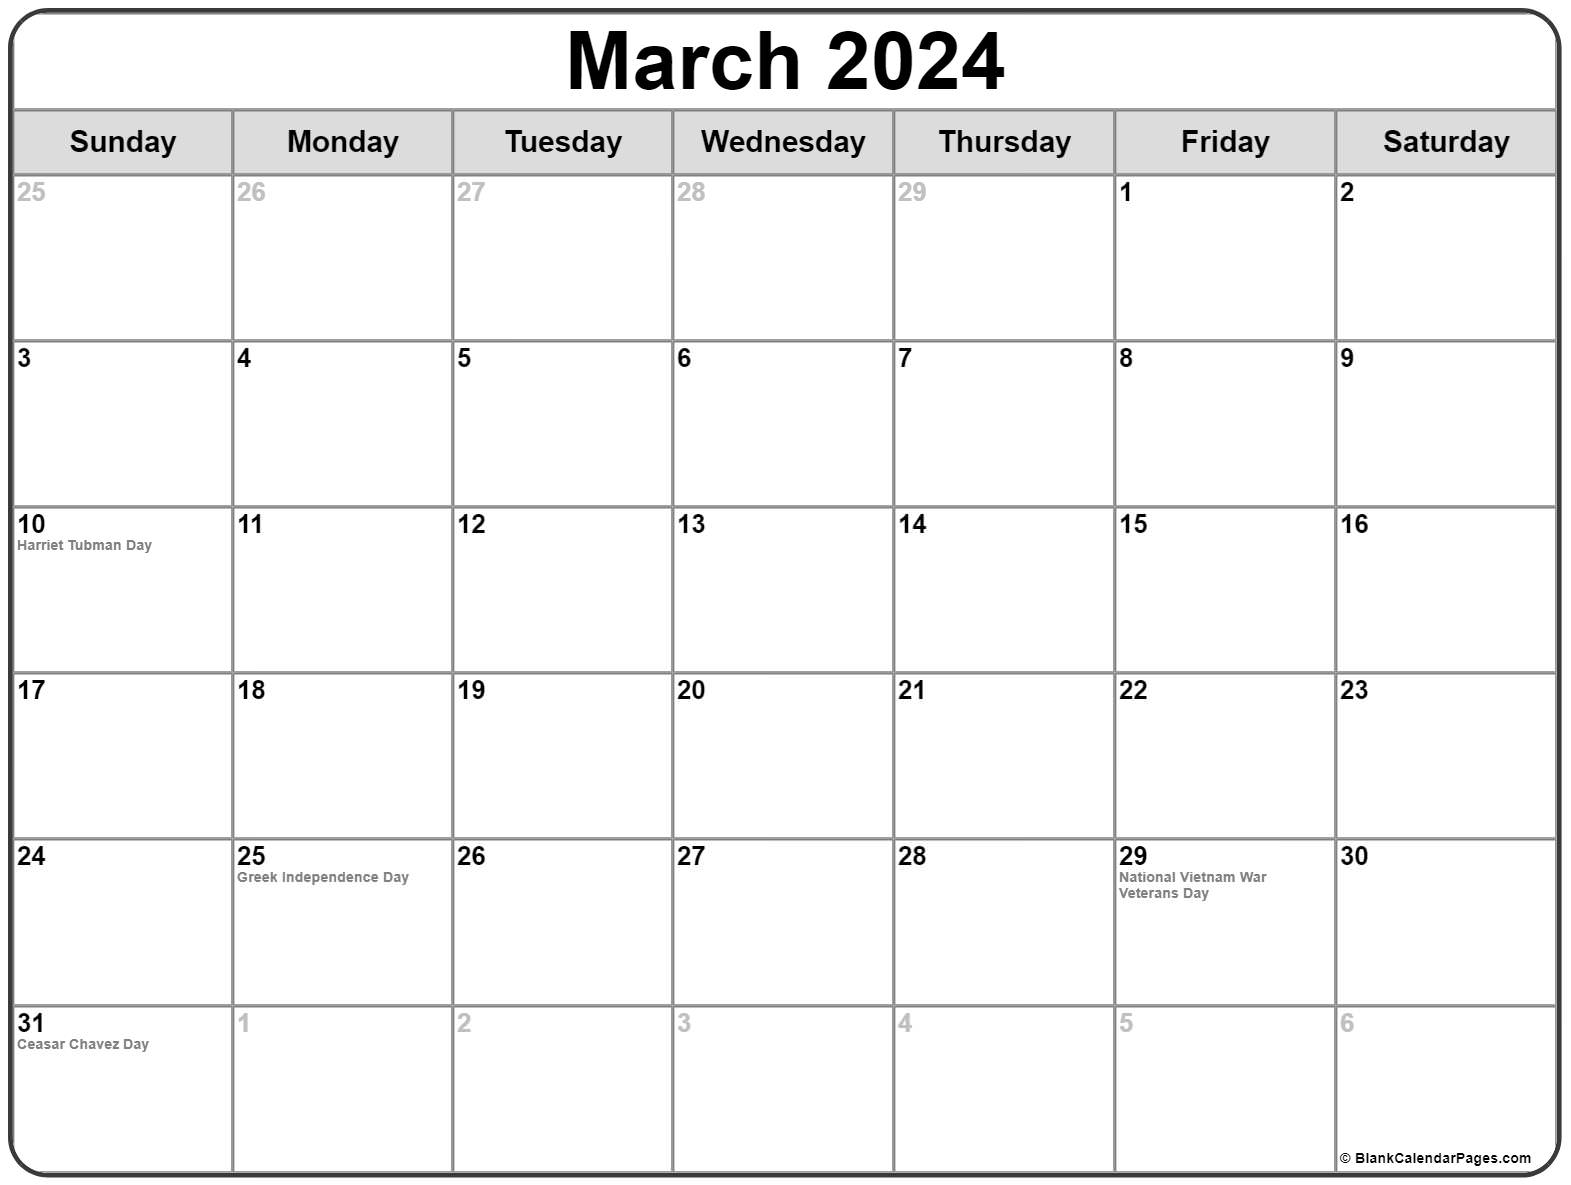 March 2022 Holiday Calendar March 2022 With Holidays Calendar